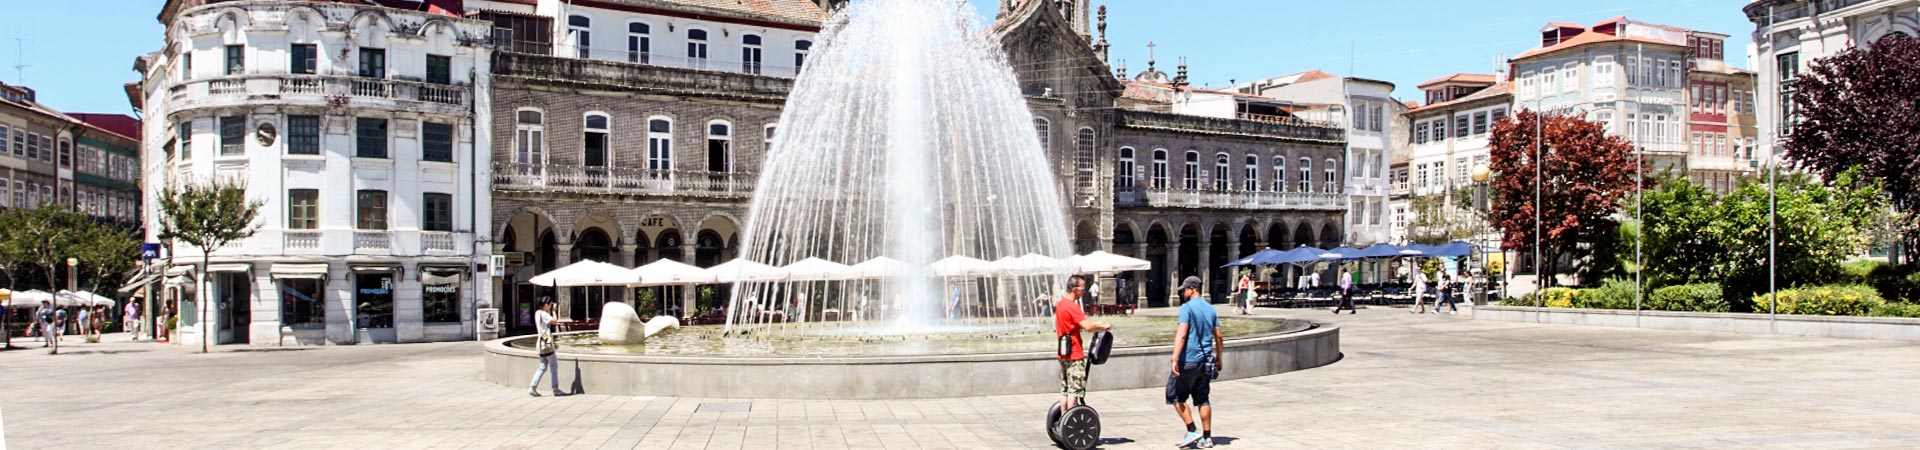 The city of Braga